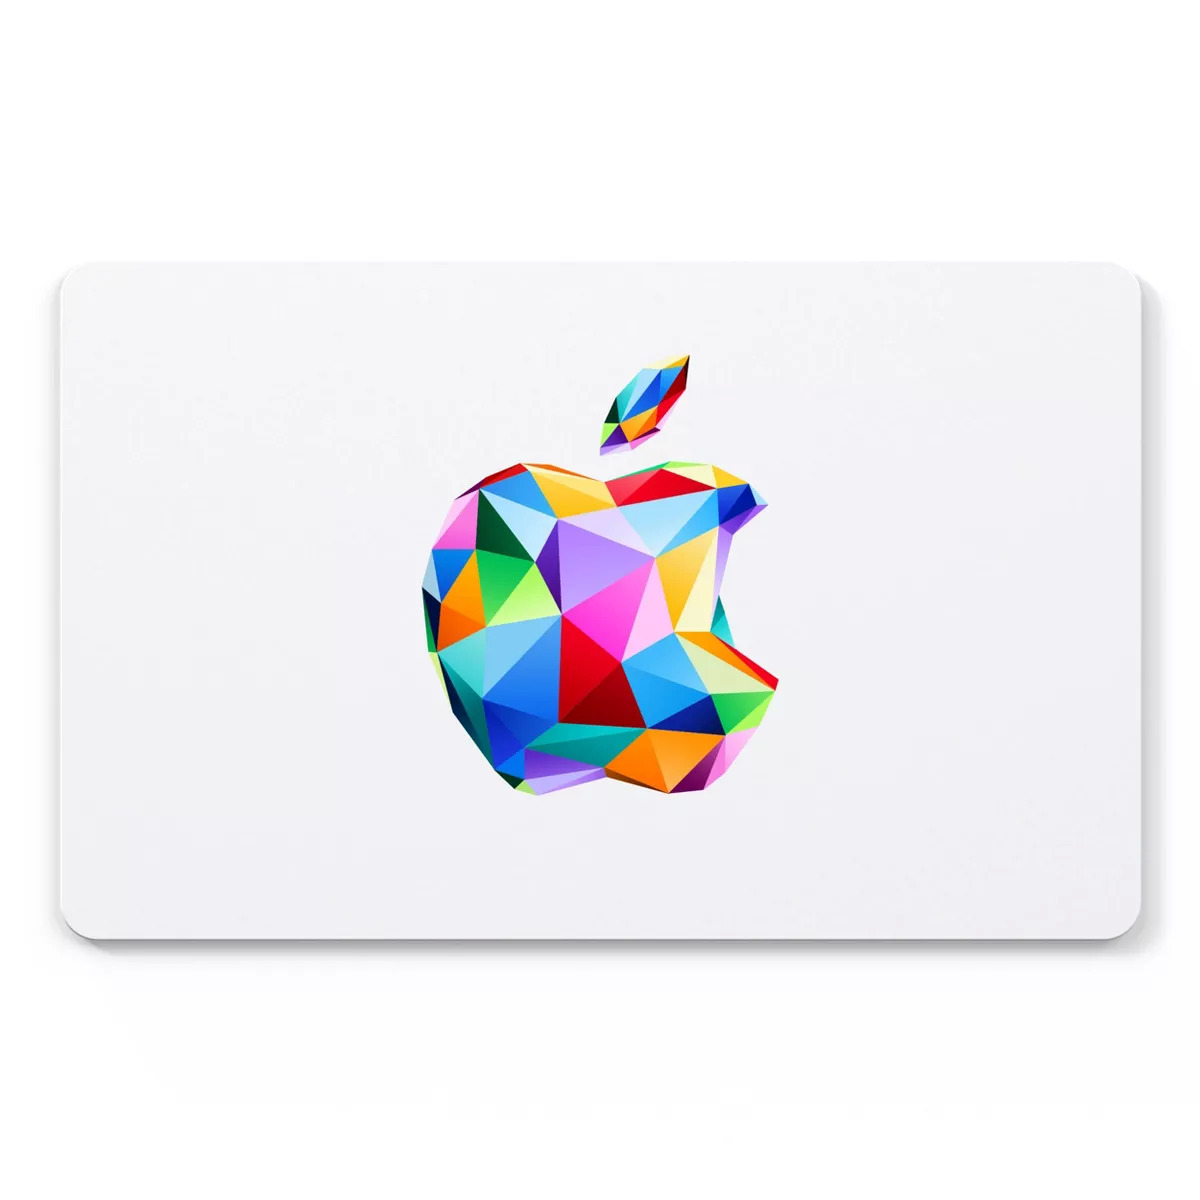 claim costco apple gift card｜TikTok Search